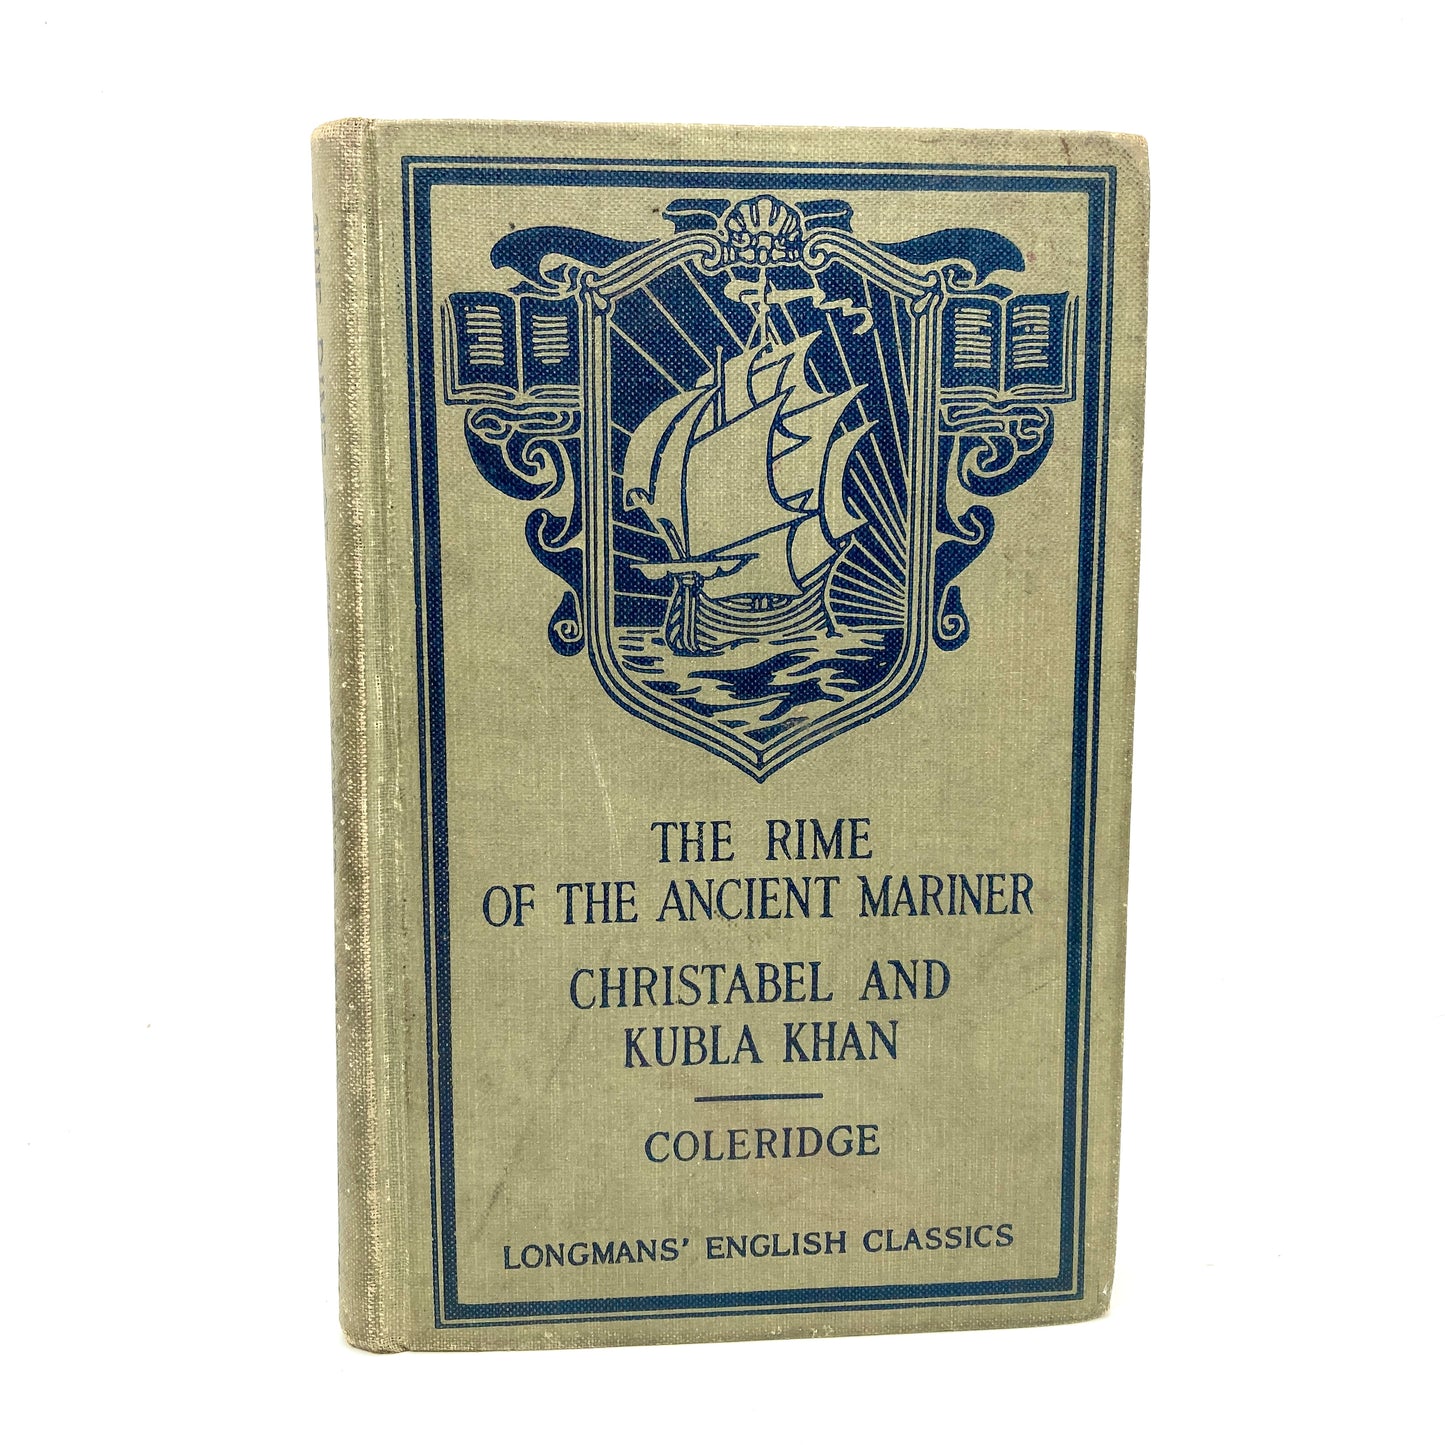 COLERDIGE, Samuel Taylor "The Rime of the Ancient Mariner" [Longman's English Classics, c1900]